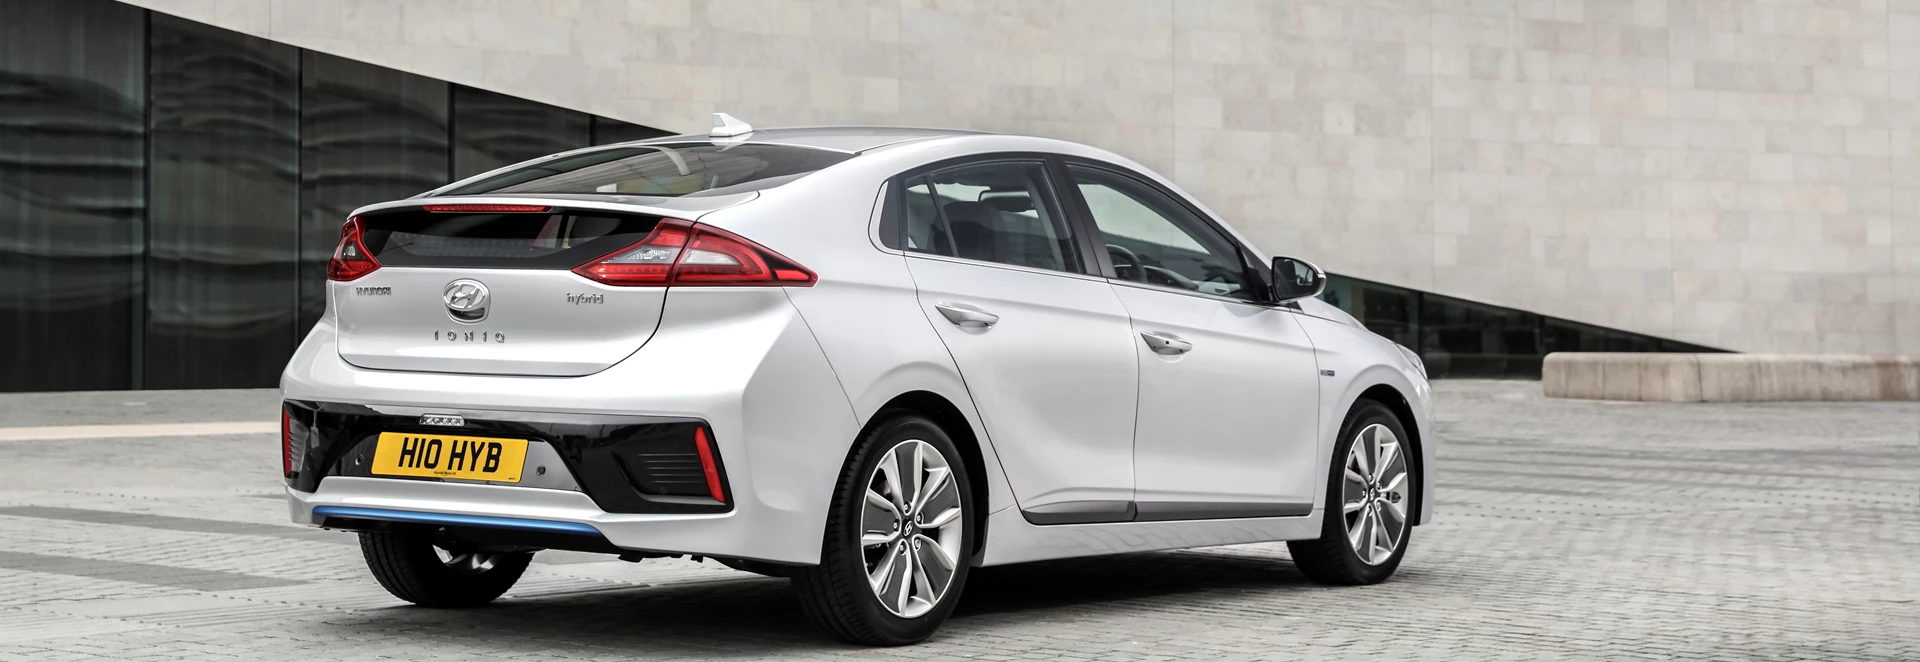 IONIQ Hybrid Premium SE hatchback review - Car Keys